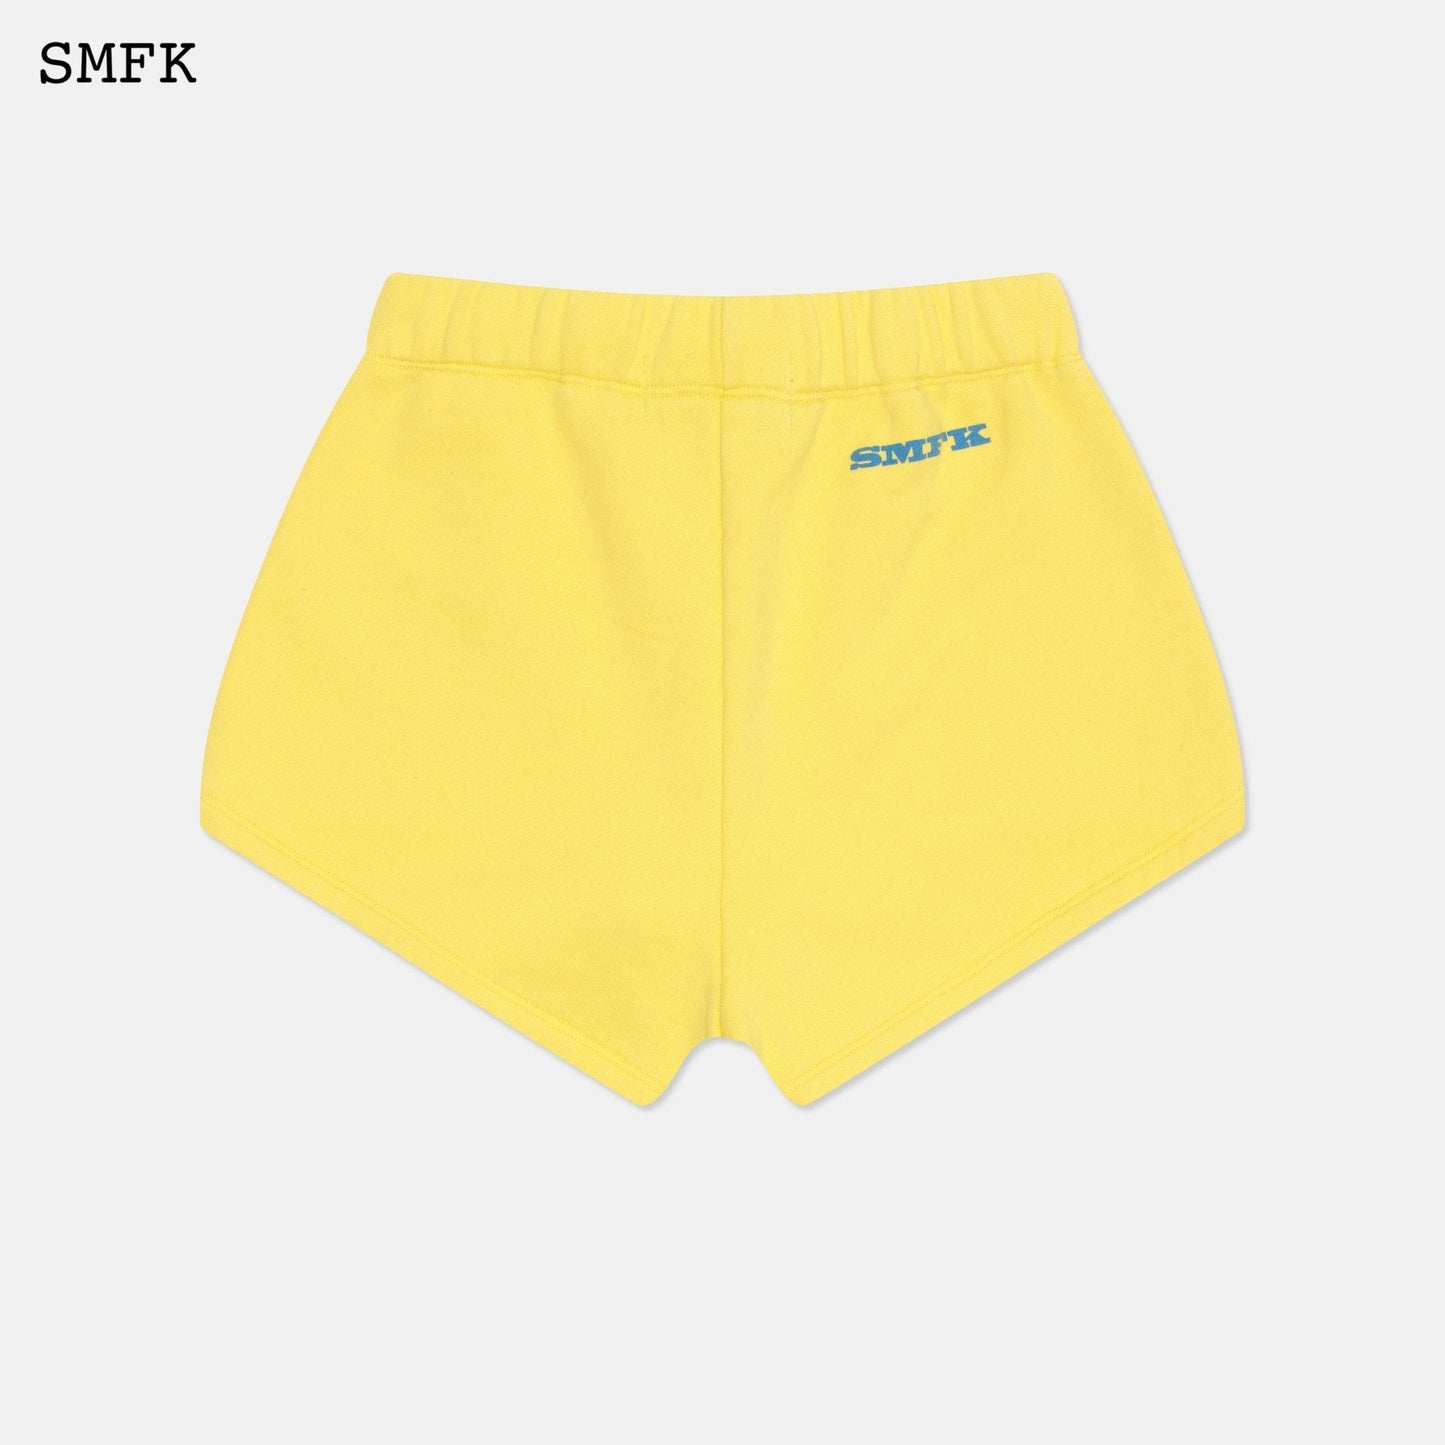 SMFK Compass Academy Yellow Short Jogging Pants